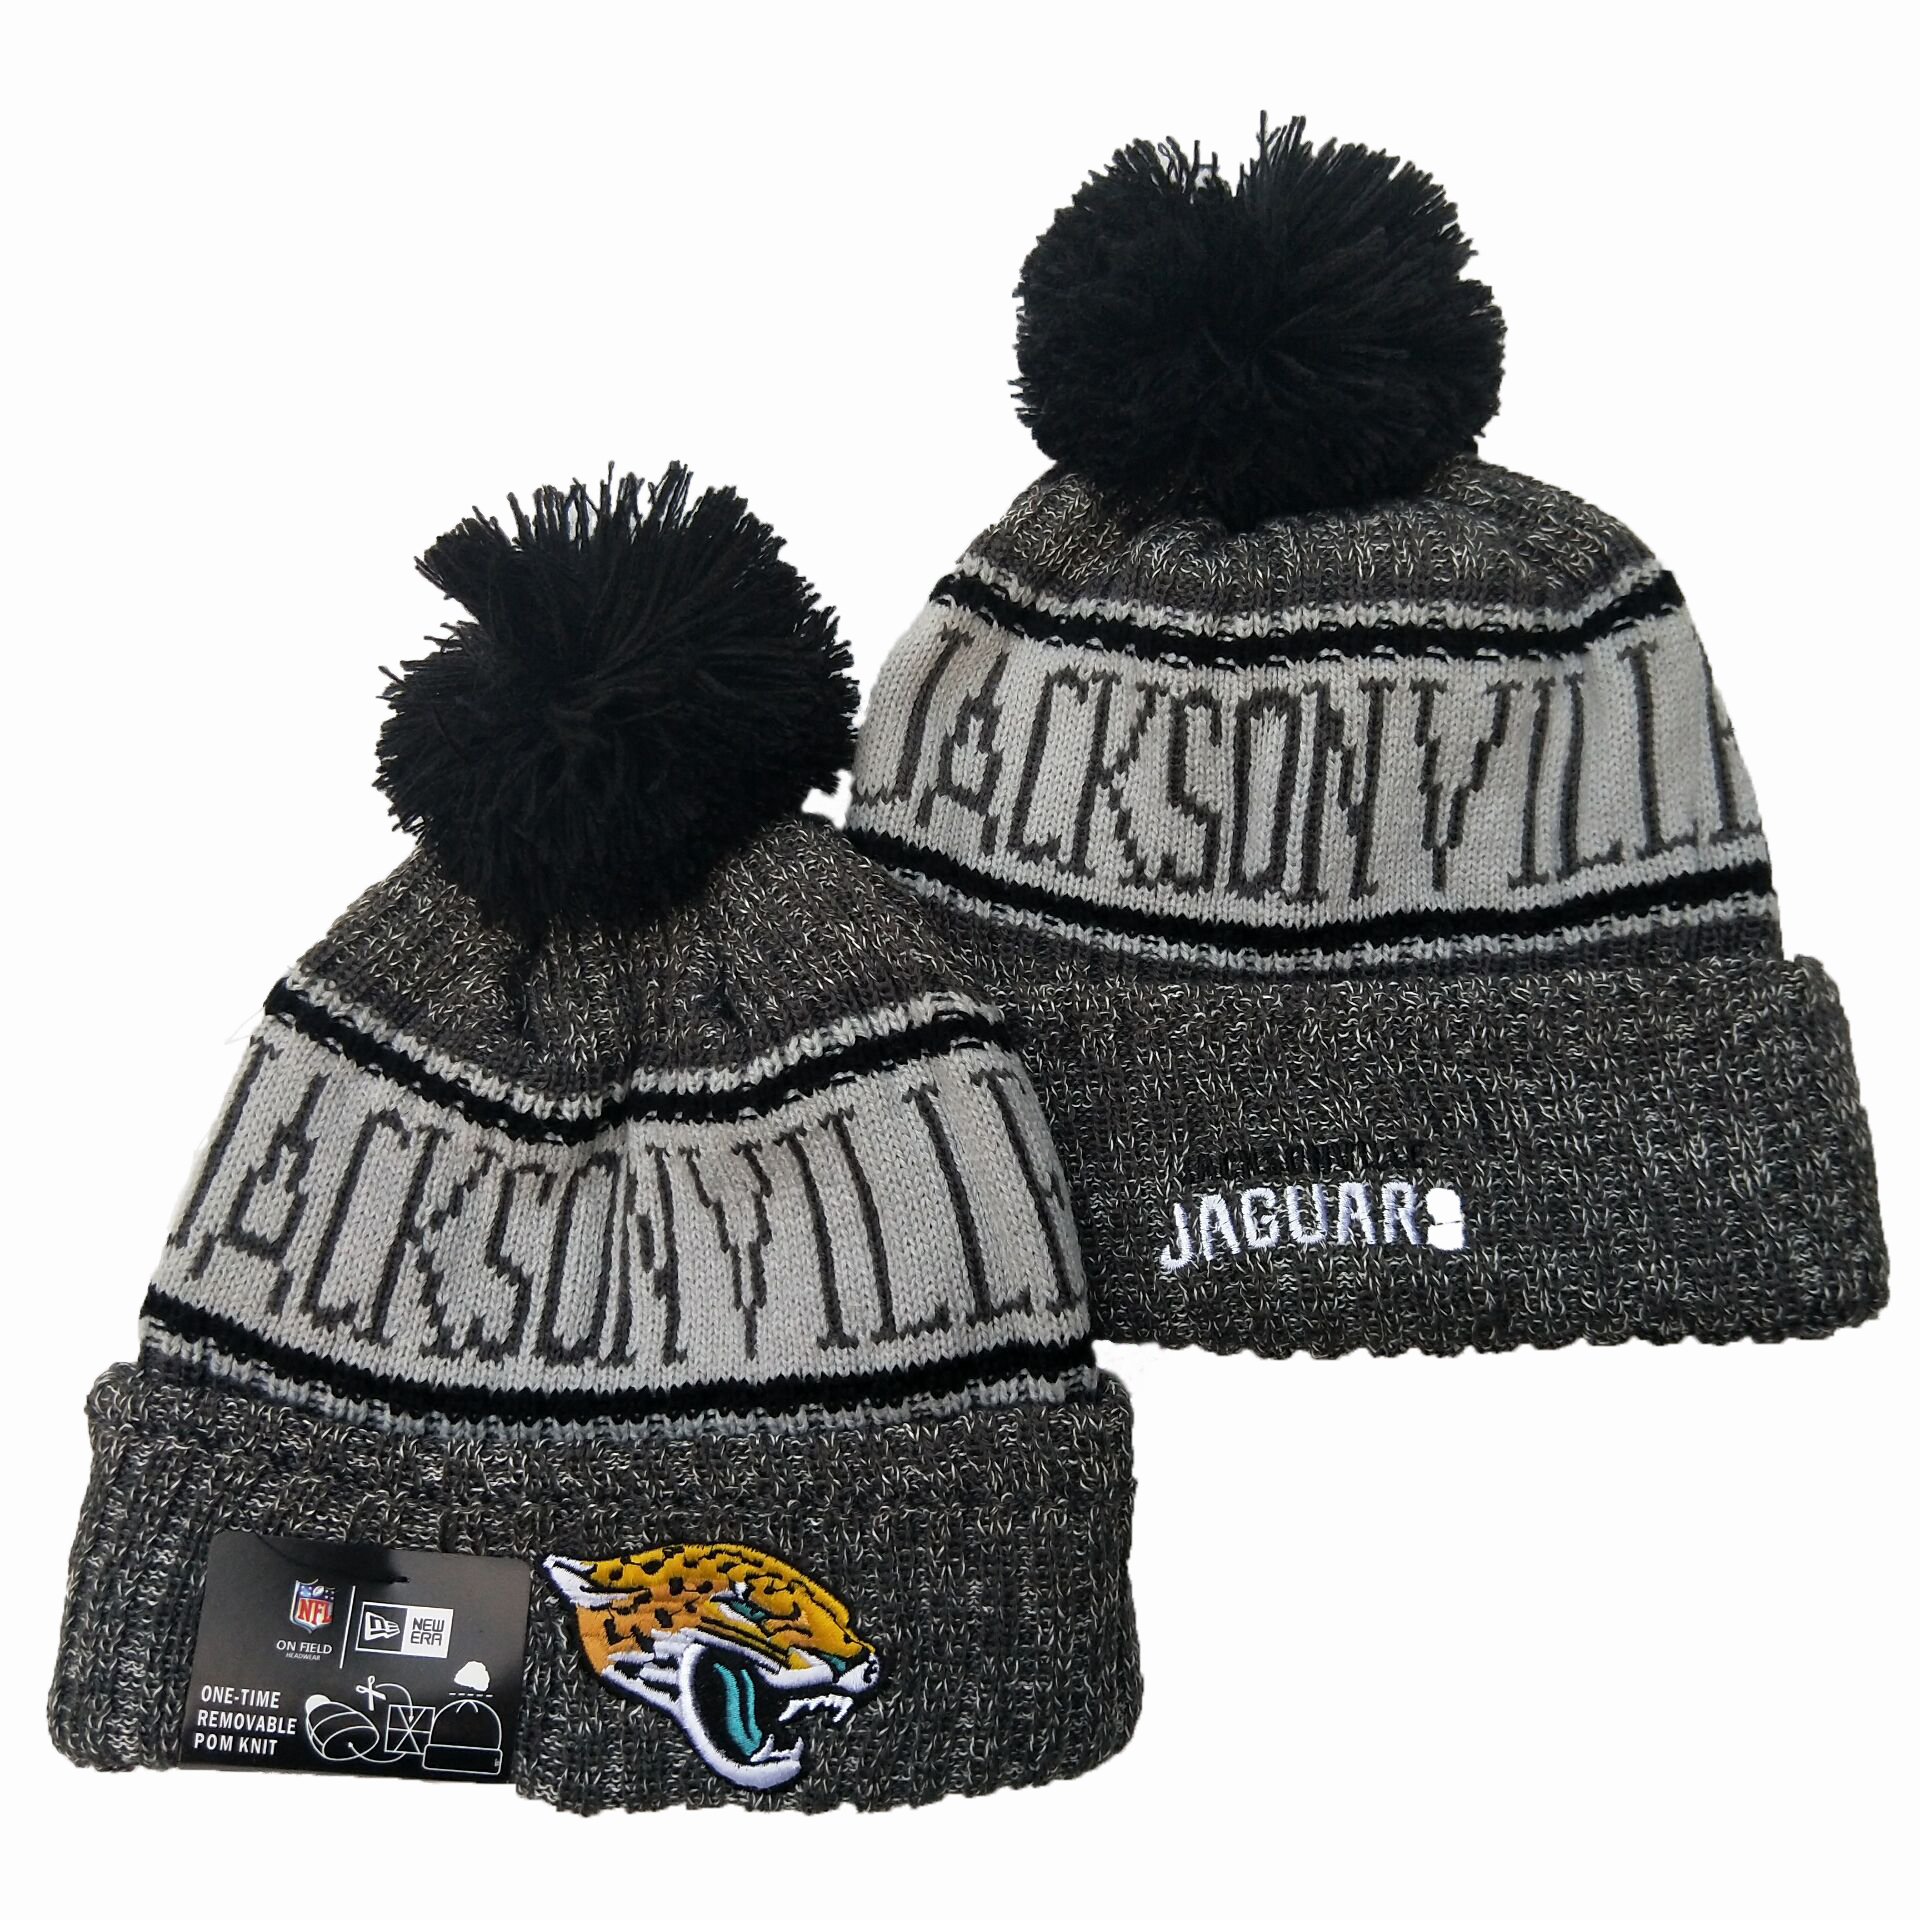 Jacksonville Jaguars Knit Hats -7